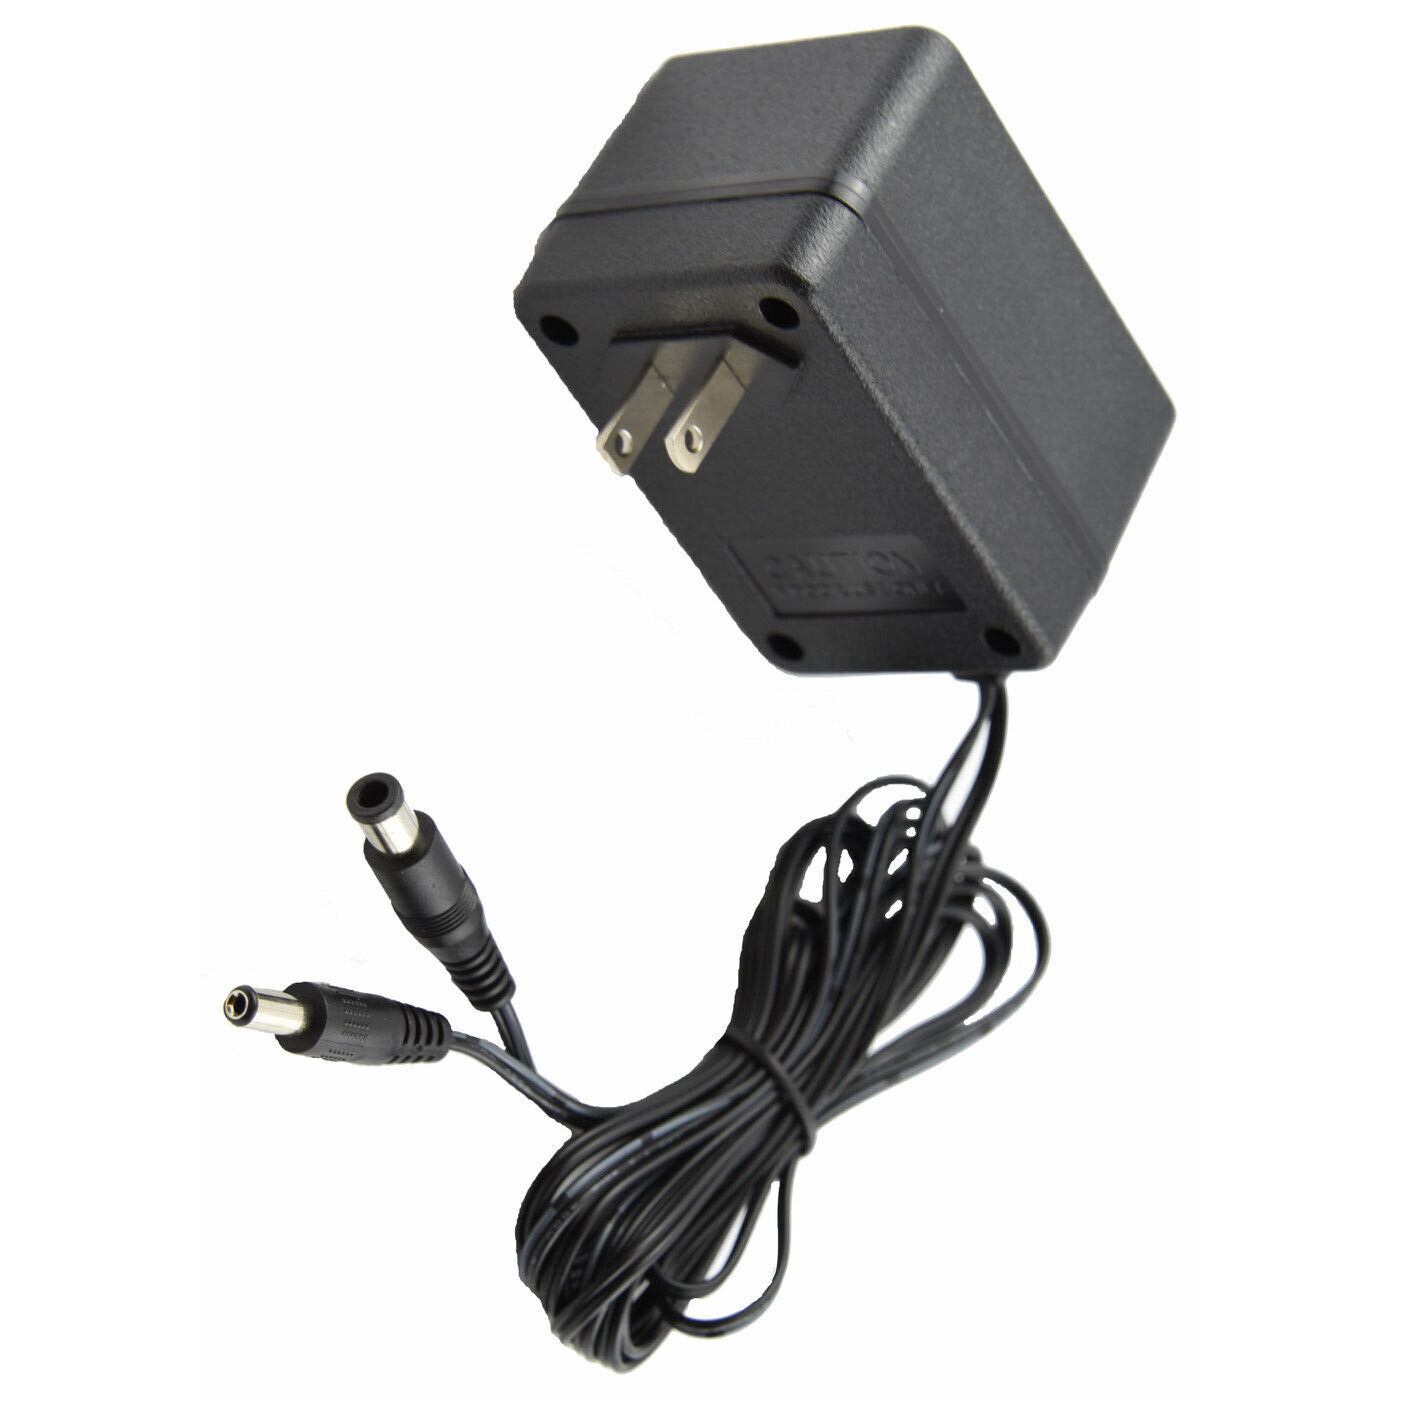 *Brand NEW*SEGA Genesis Model 1 MK-160 Audio AV RAC Cable Cord Adapter+ AC Power Supply